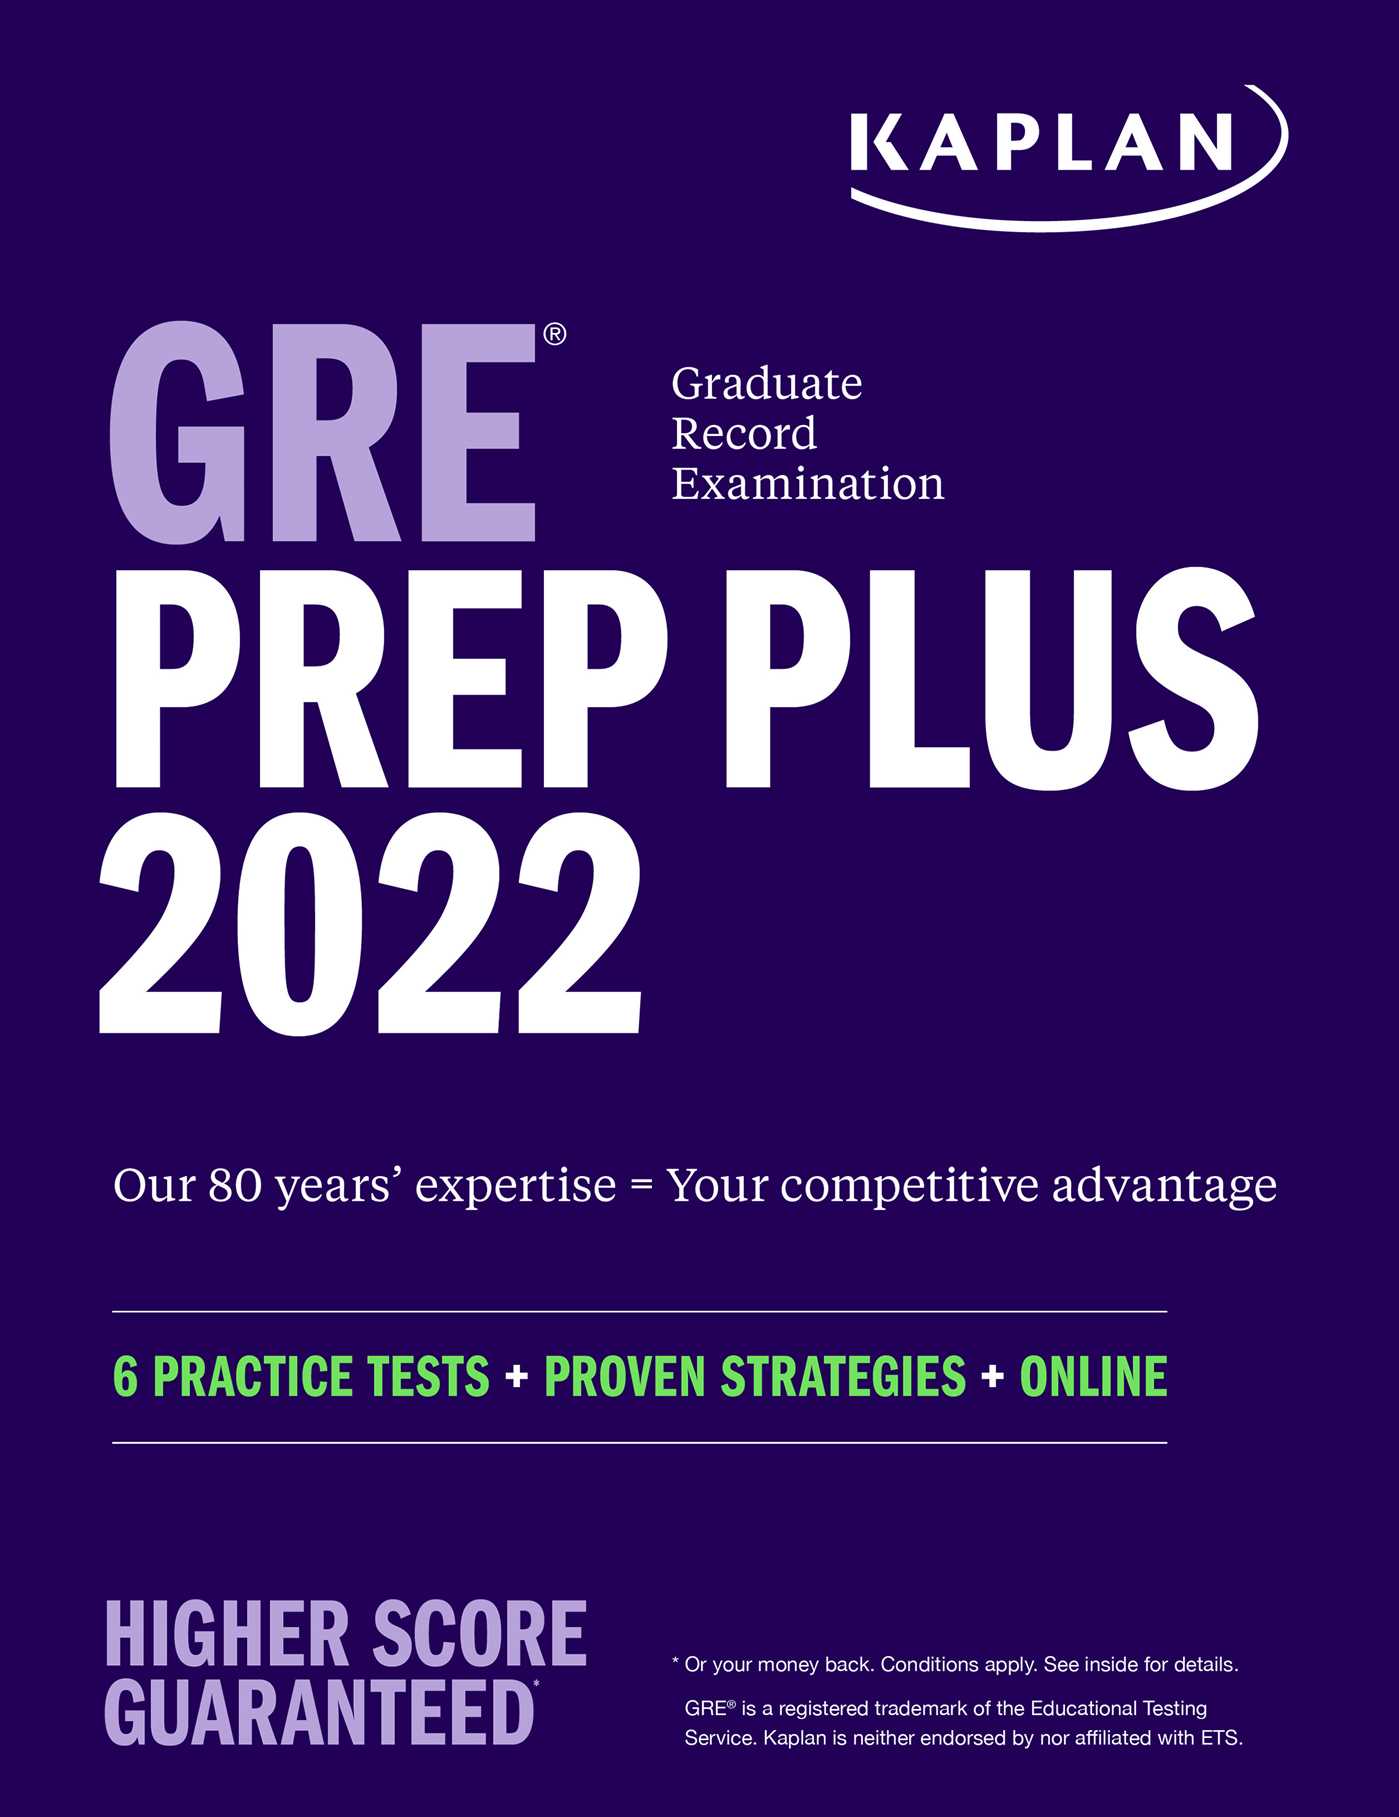 gre prep books pdf free download